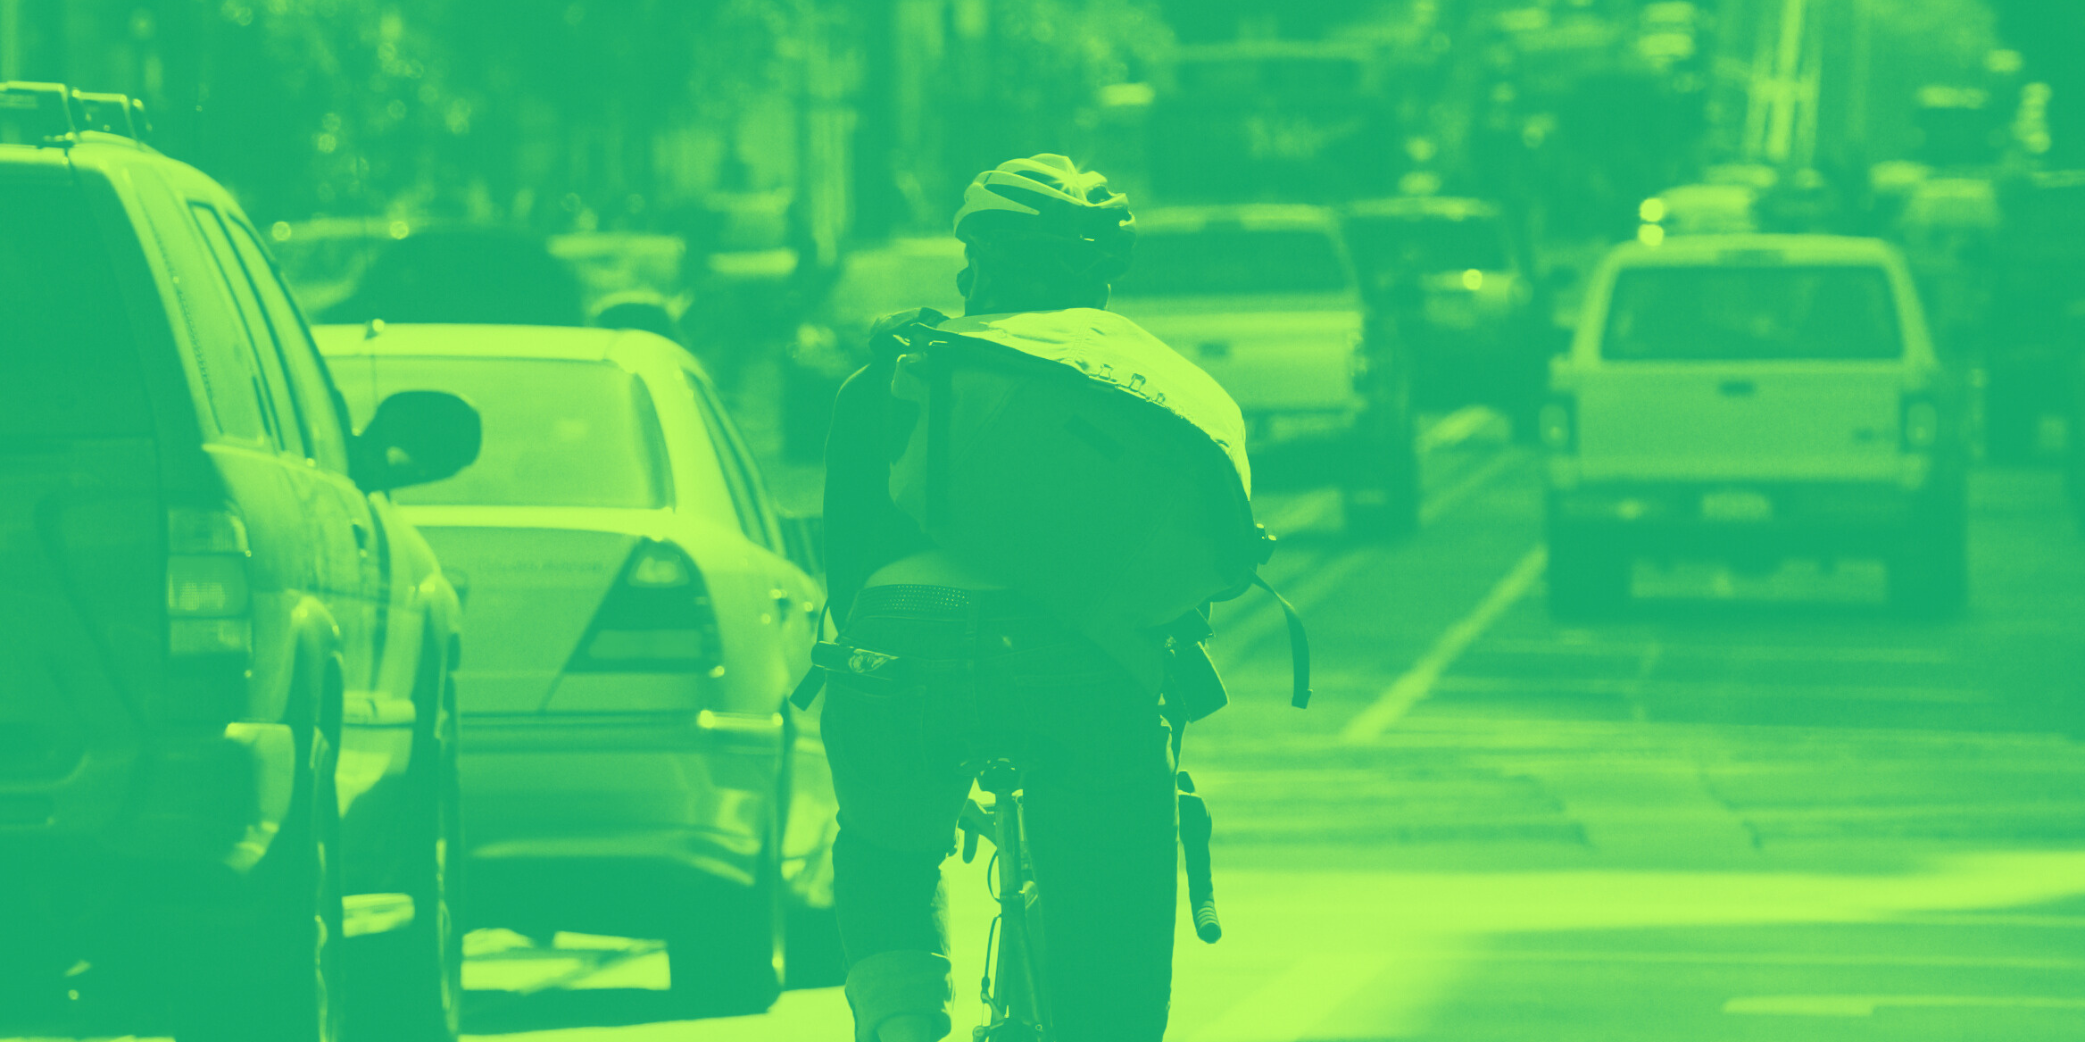 lime green duotone image of a man riding a bike alongside street traffic